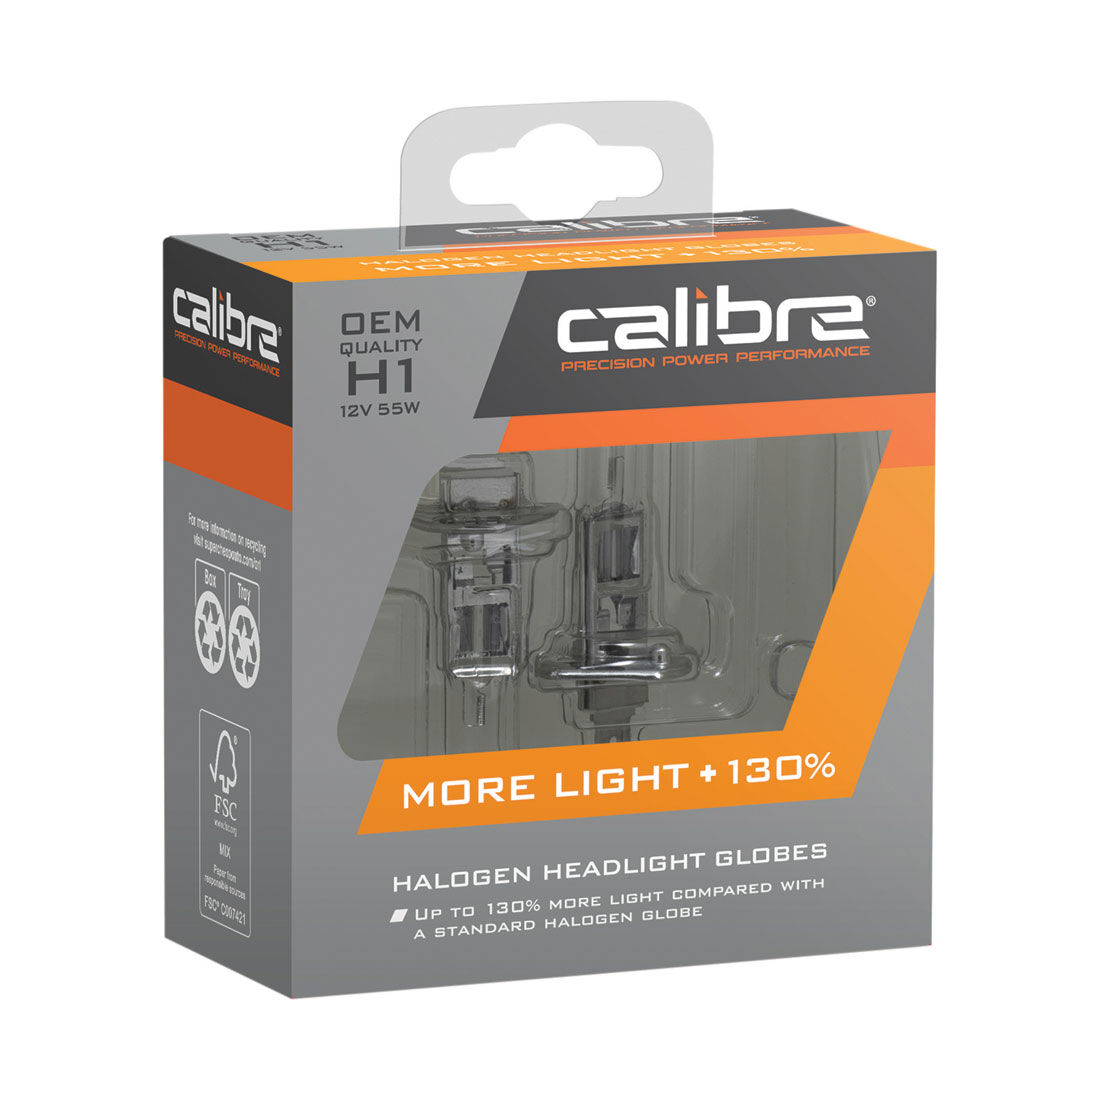 Calibre Plus 130 Headlight Globes - H1, 12V 55W, CA130H1, , scaau_hi-res